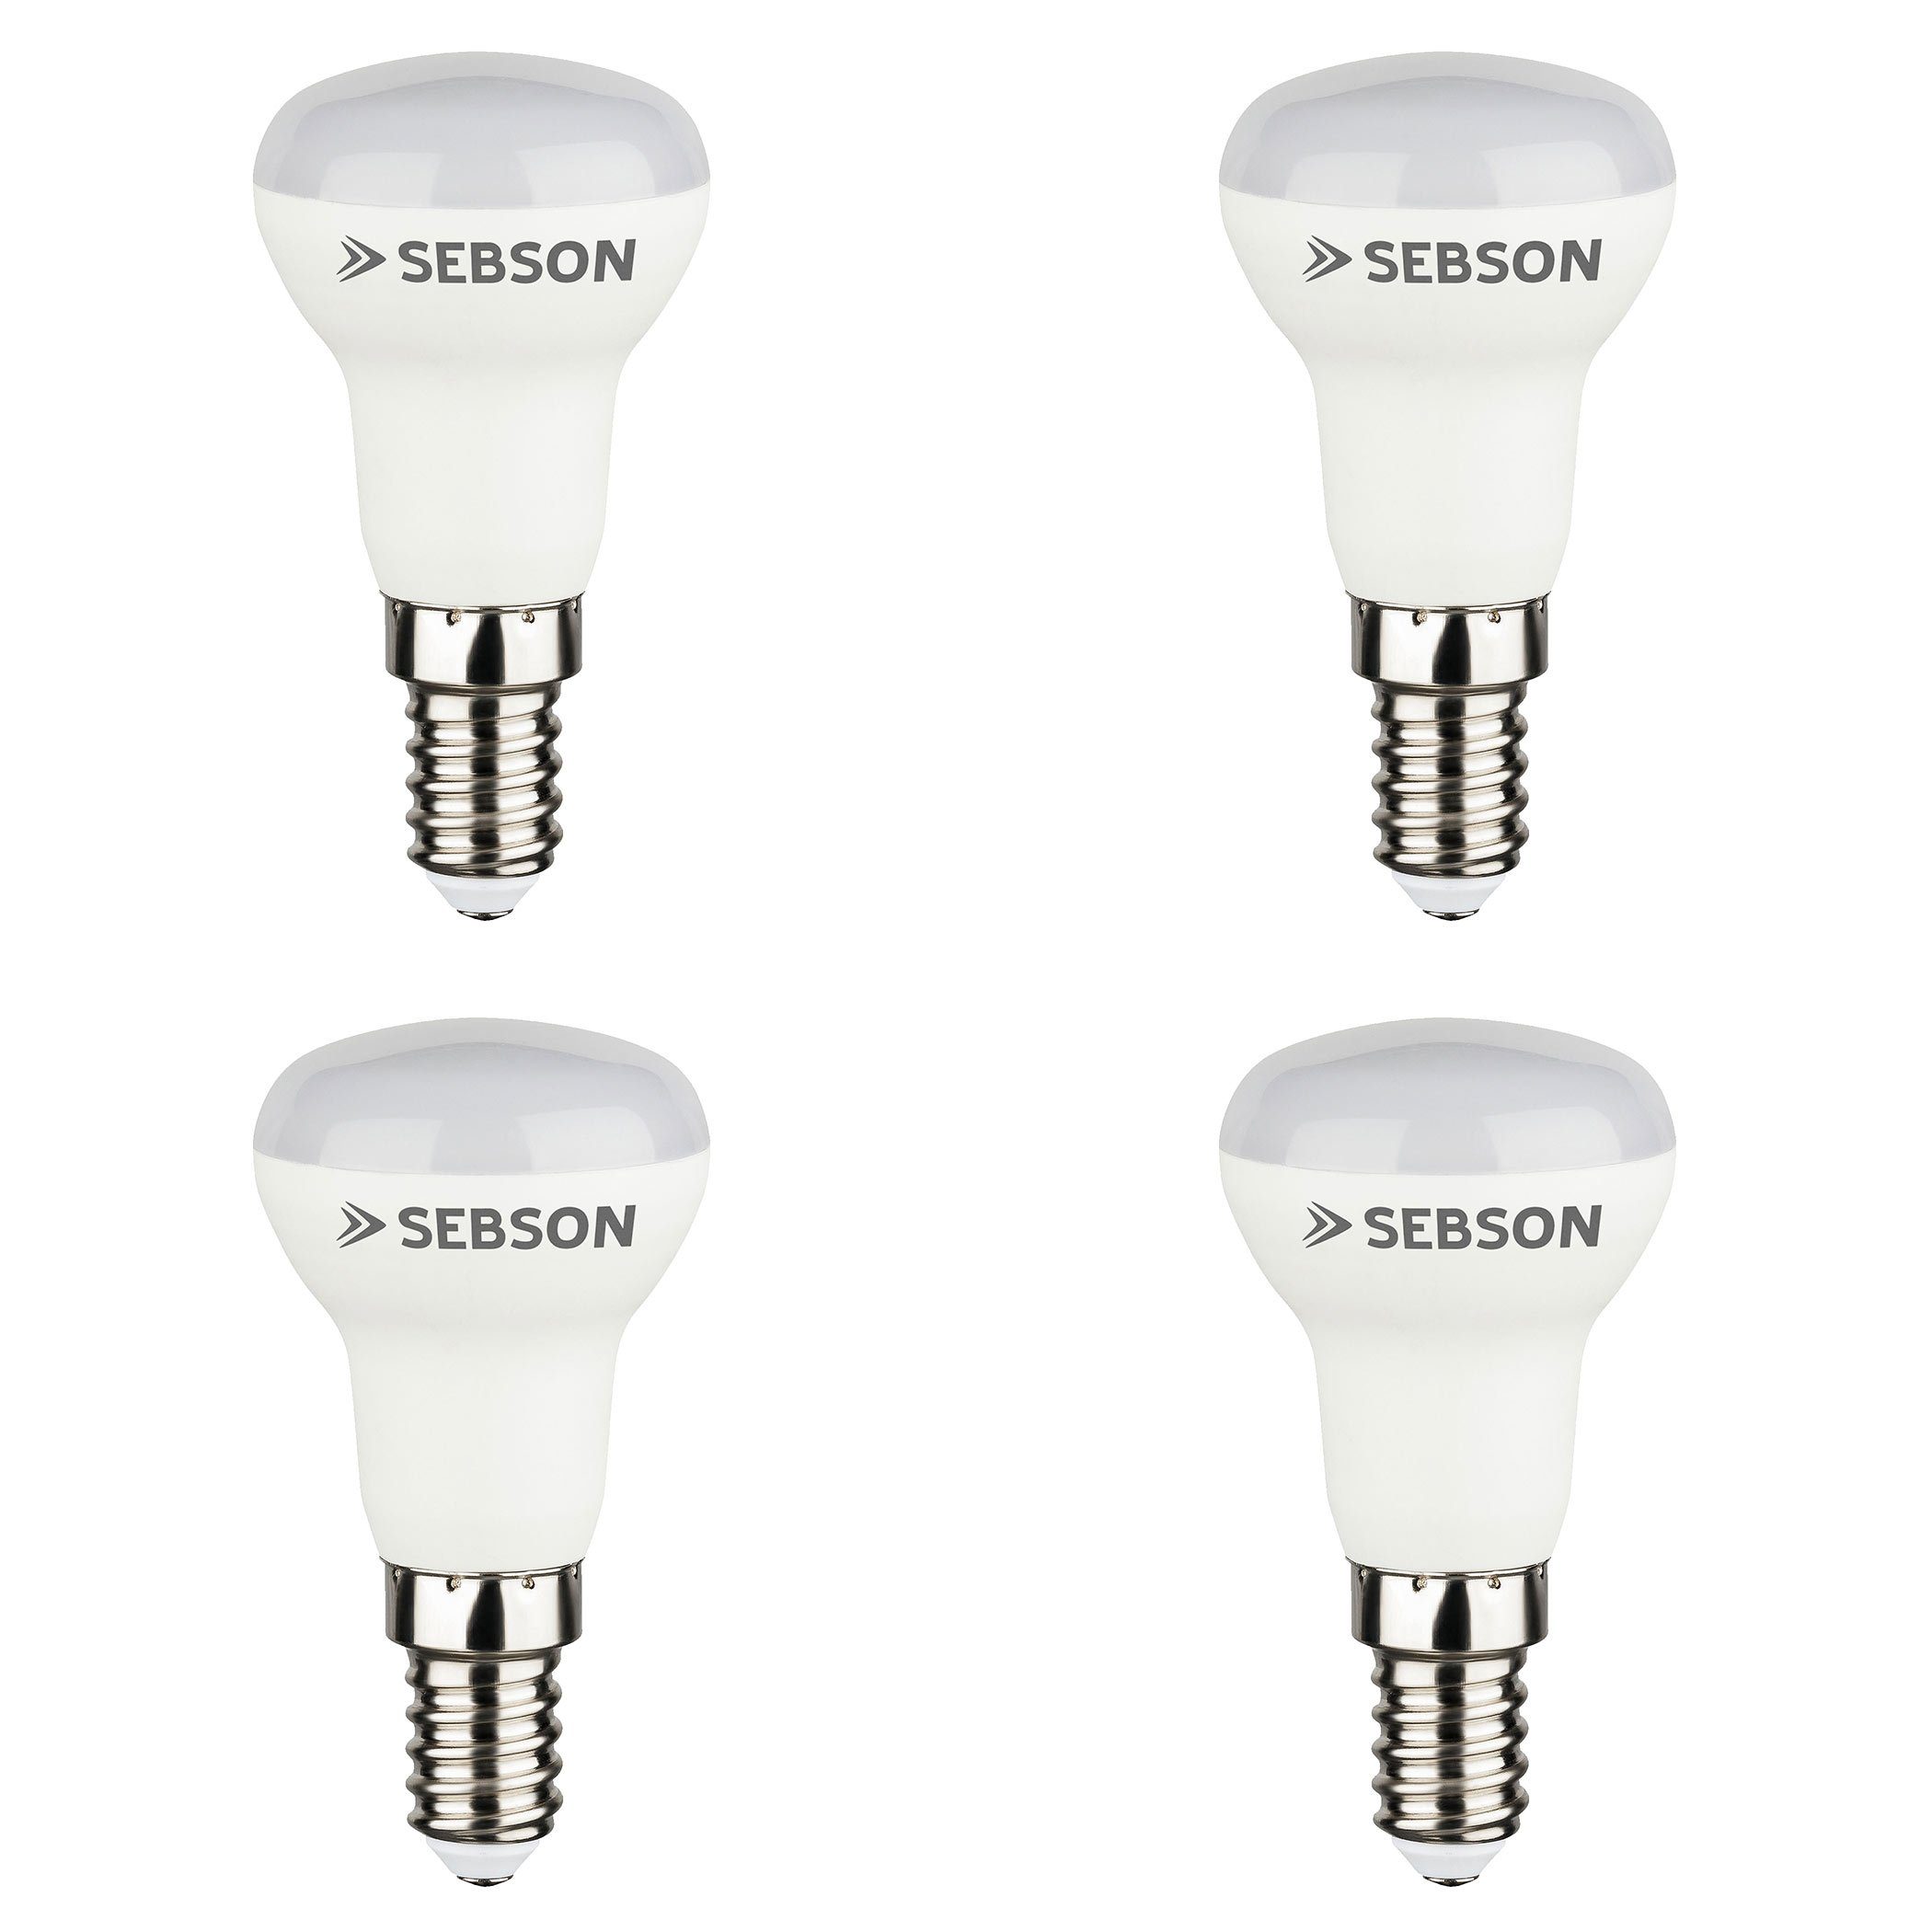 SEBSON »LED Lampe E14 R39 Reflektor 3W warmweiß 3000k 200lm, Ra97, 230V LED  Leuchtmittel flimmerfrei, E14 R39 Reflektorlampe, 4er Pack« LED-Leuchtmittel  online kaufen | OTTO